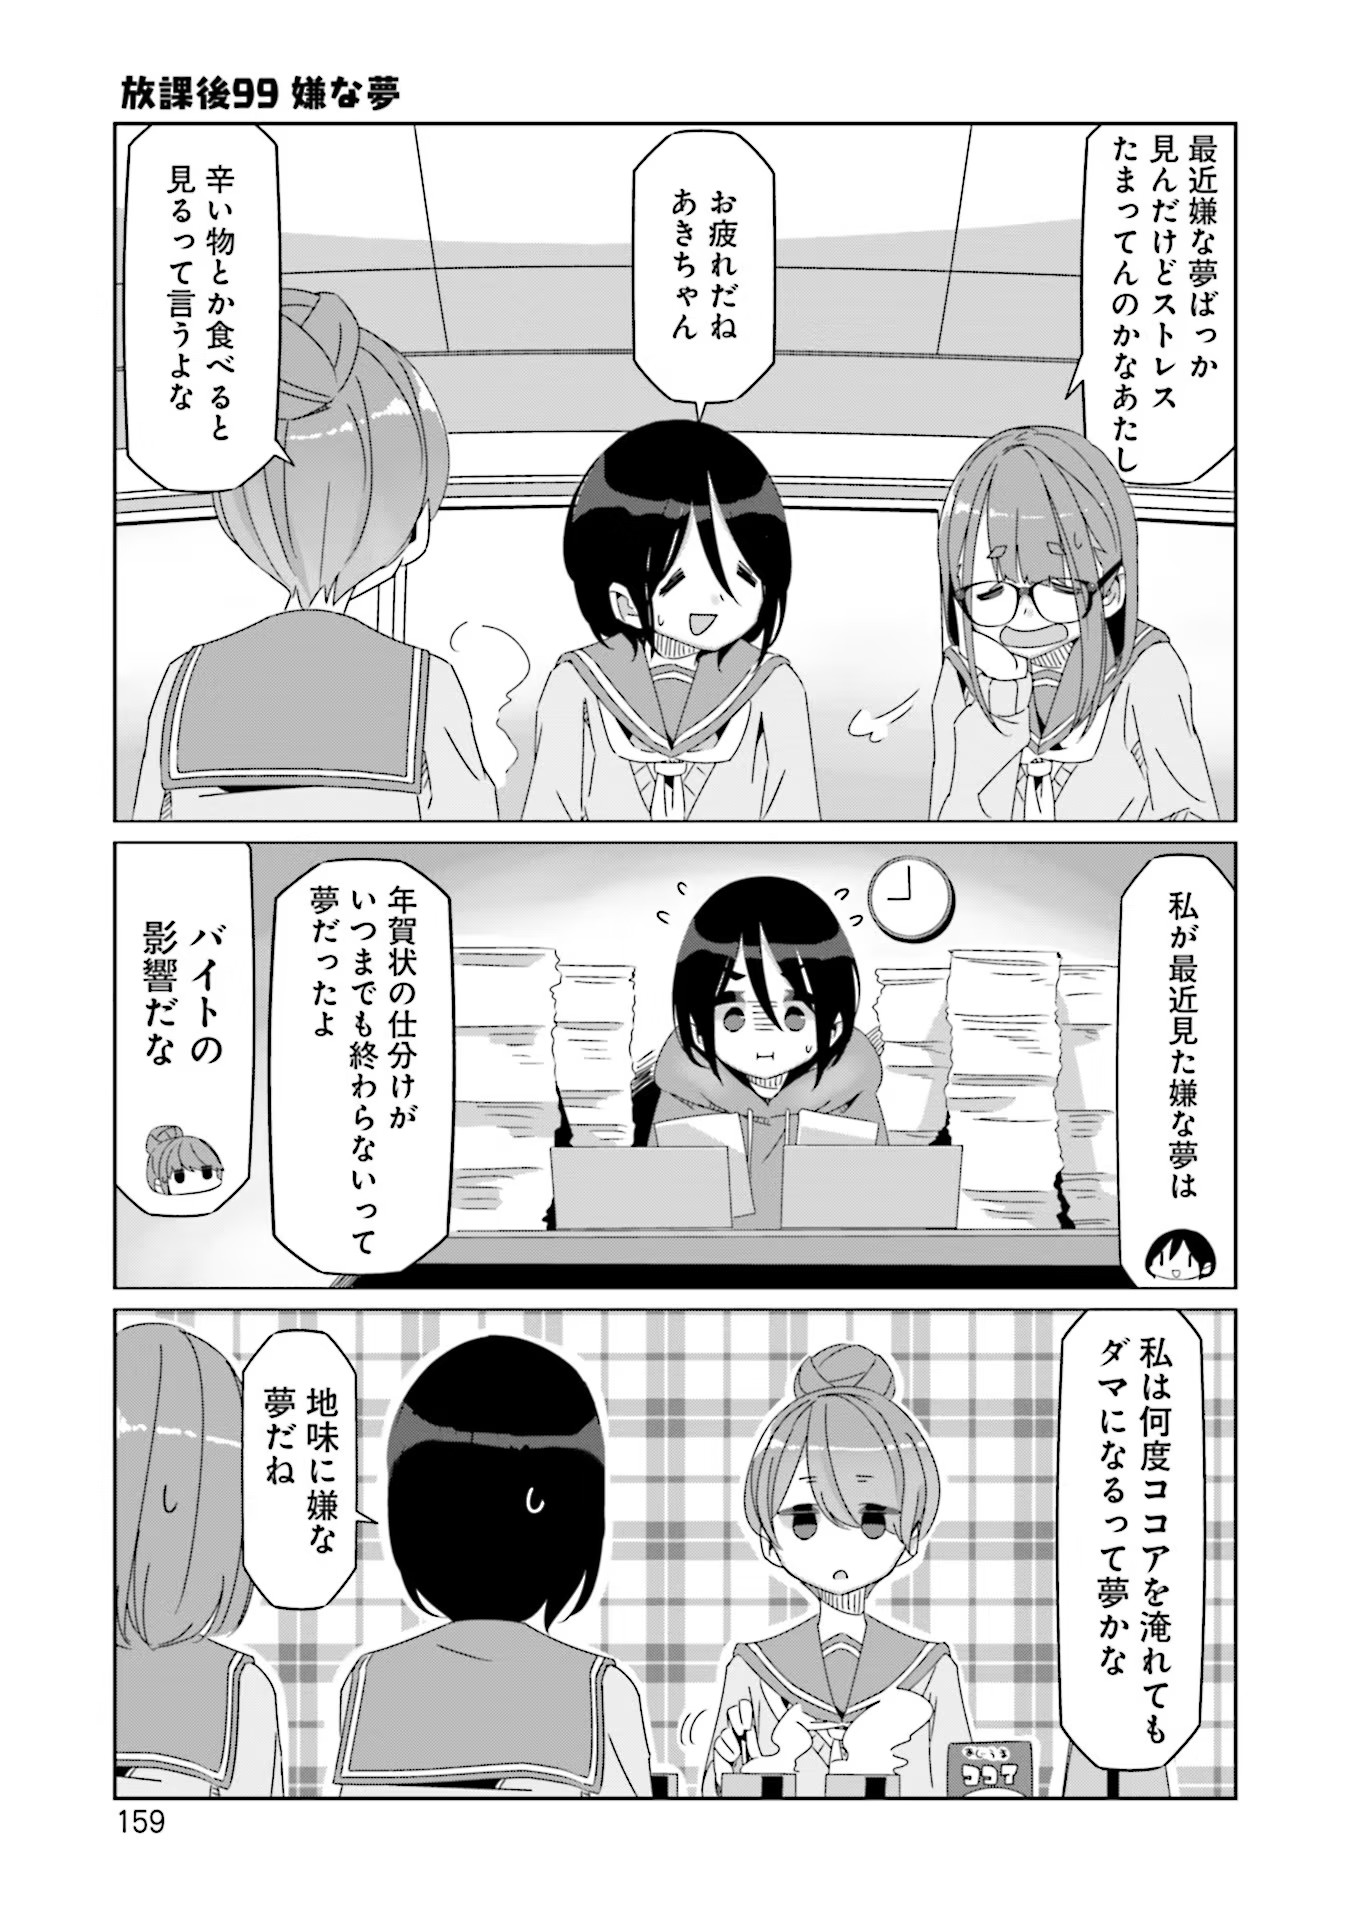 Yuru Camp - Chapter 69.5 - Page 1